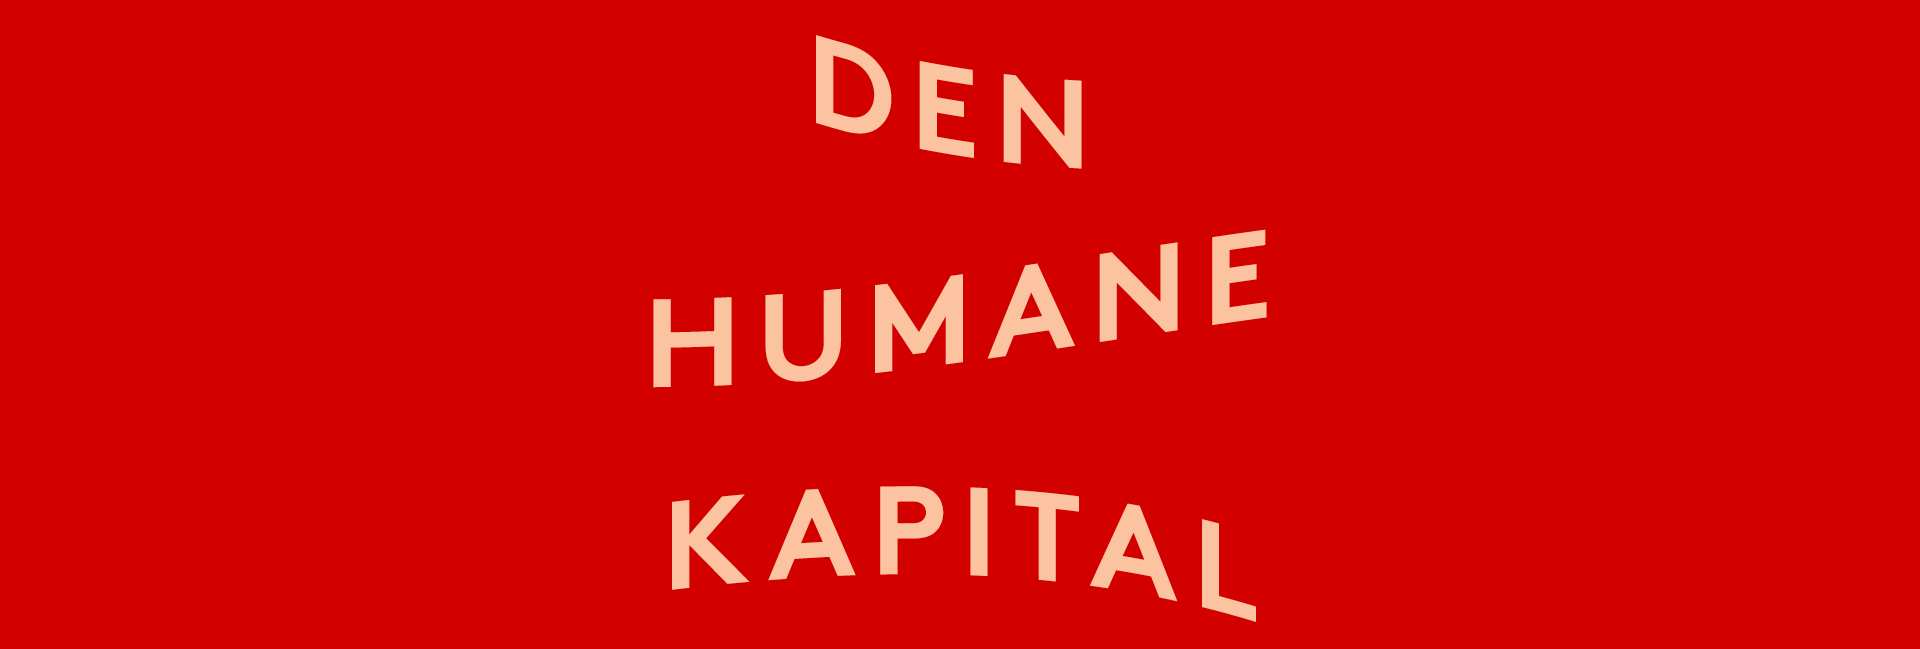 Den humane kapital